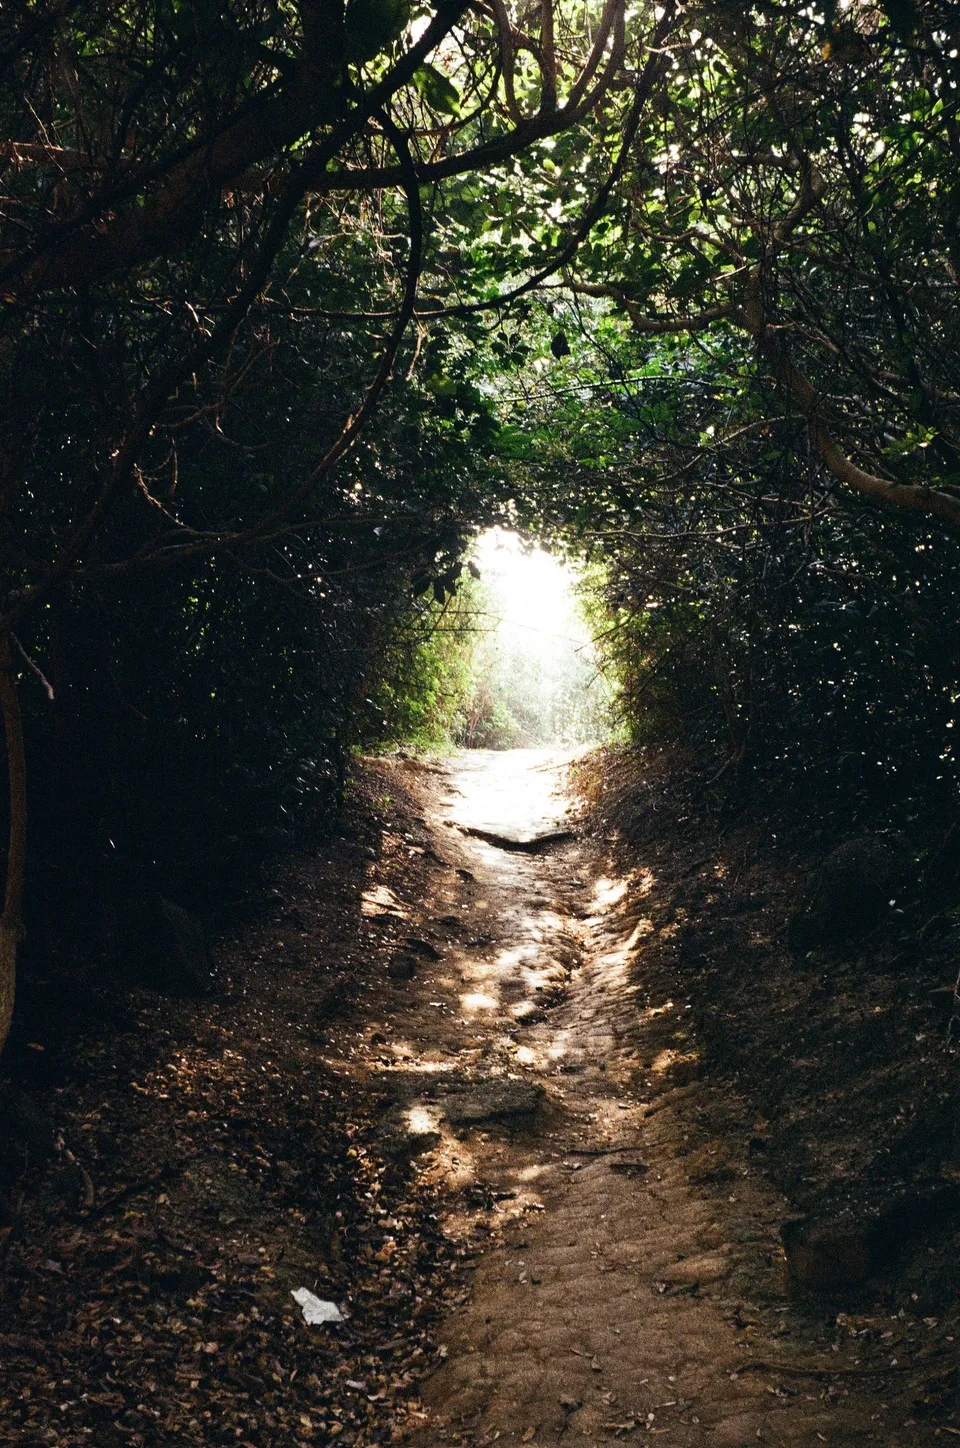 Dreamy light through a path